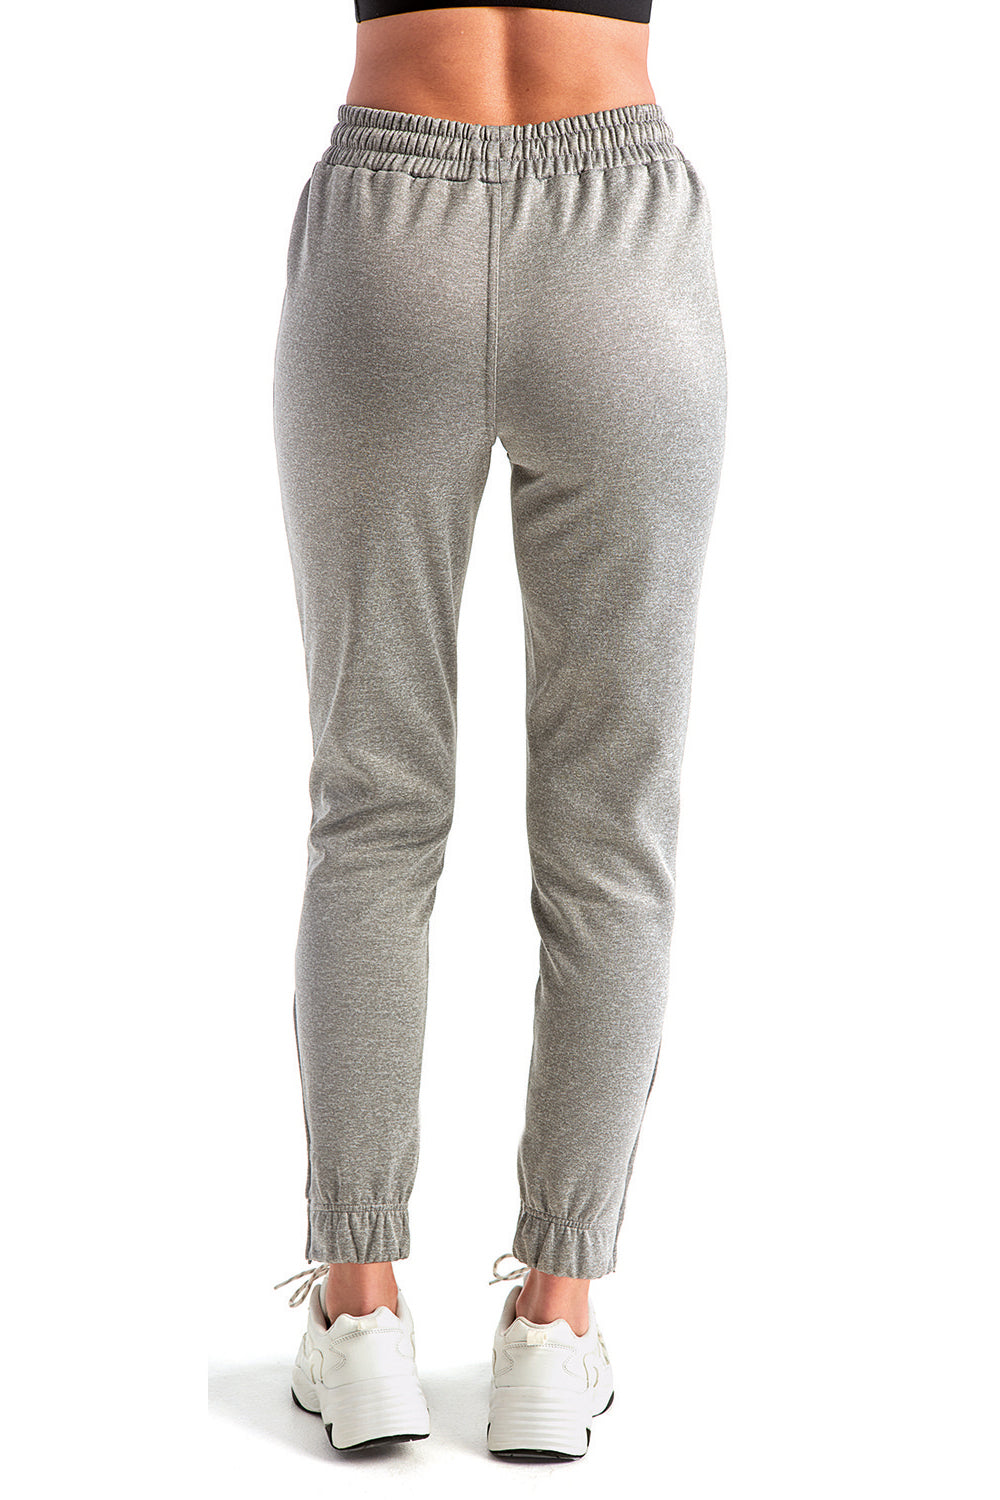 TriDri TD499 Womens Moisture Wicking Jogger Sweatpants w/ Pockets Grey Melange Back